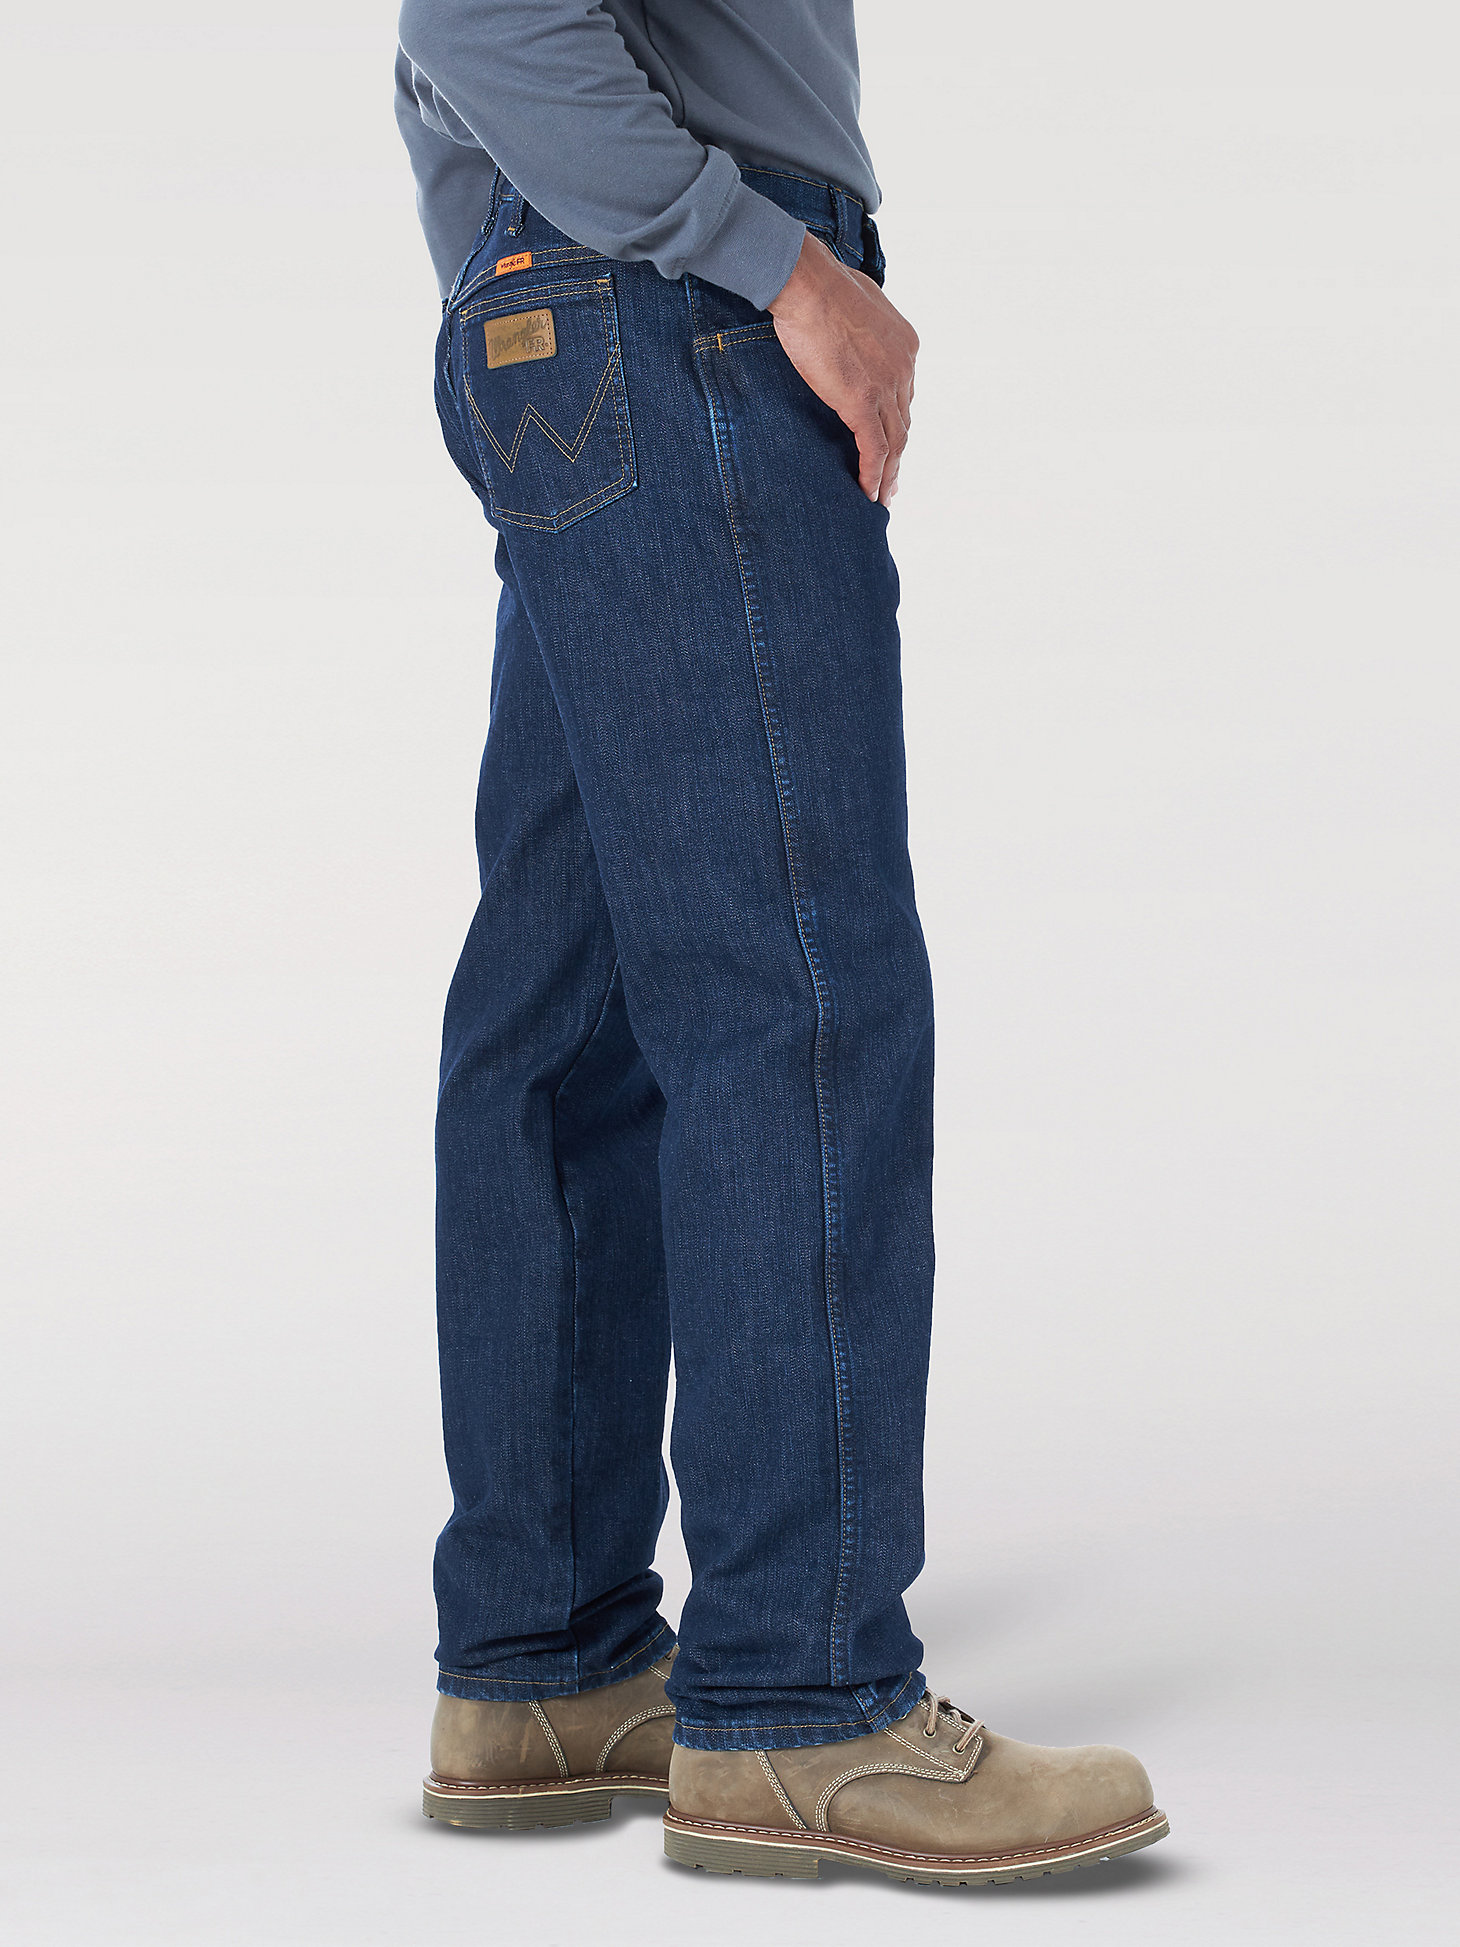 Wrangler® FR Flame Resistant Original Fit Jean in Dark Wash alternative view 1